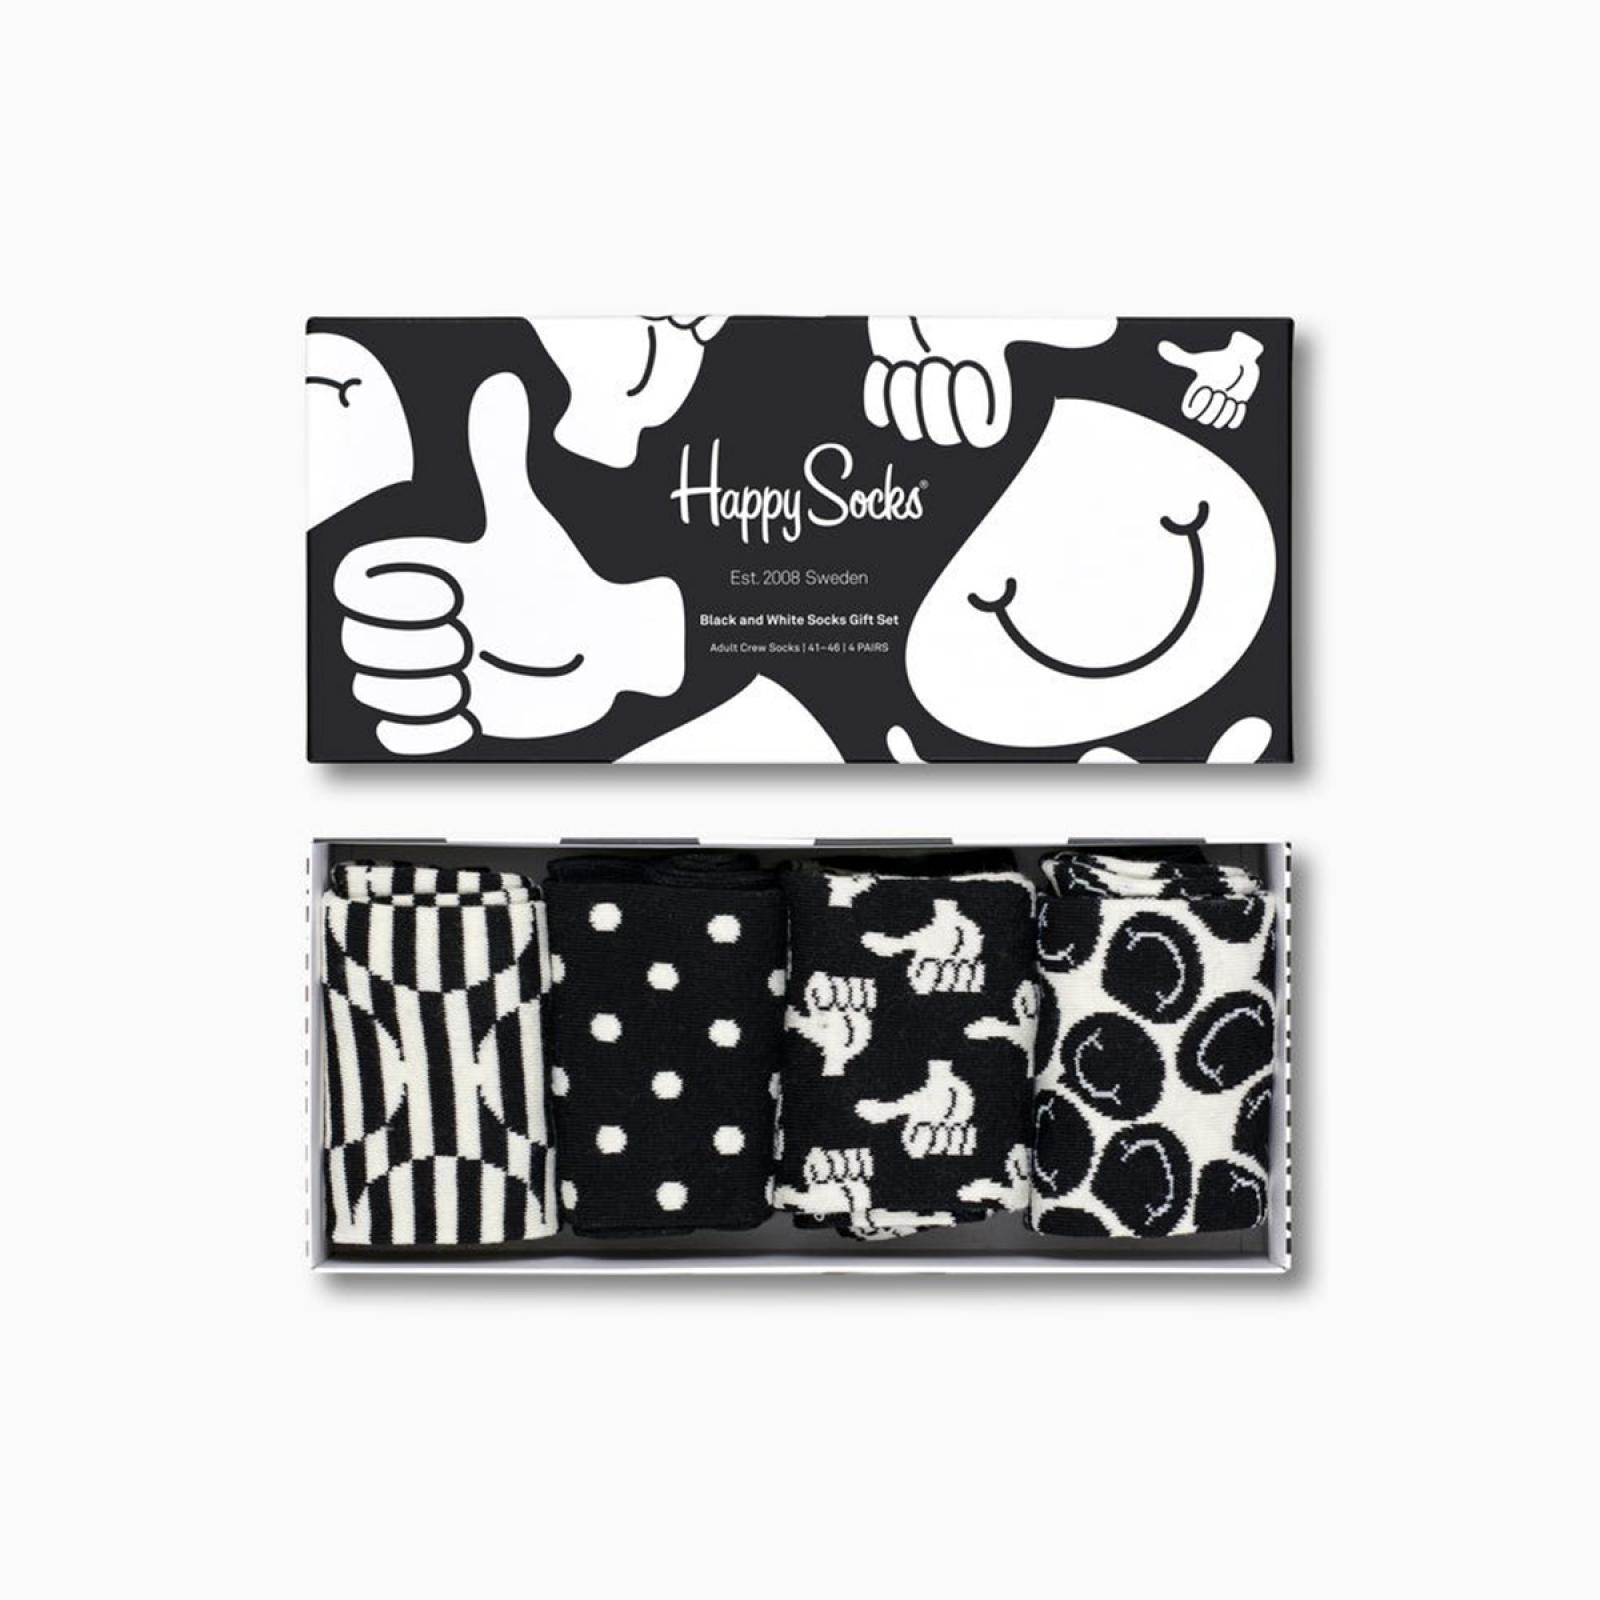 Happy Socks Black and White Socks Gift Box 4-Pack - 1